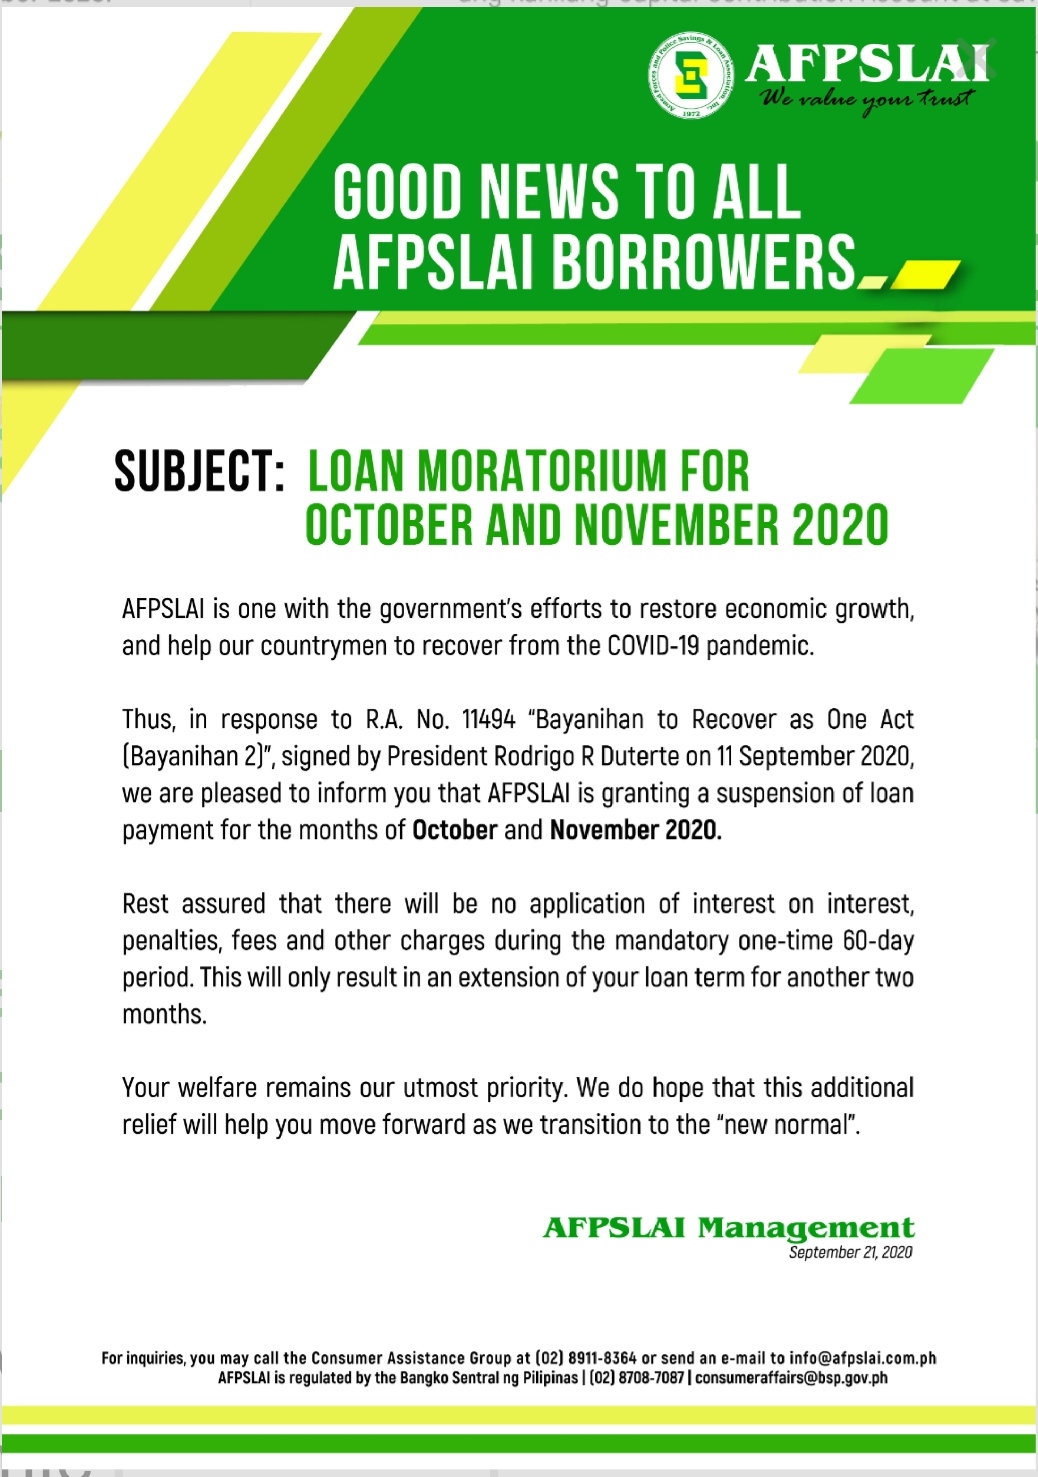 AFPSLAI Implements 60-day Loan Moratorium